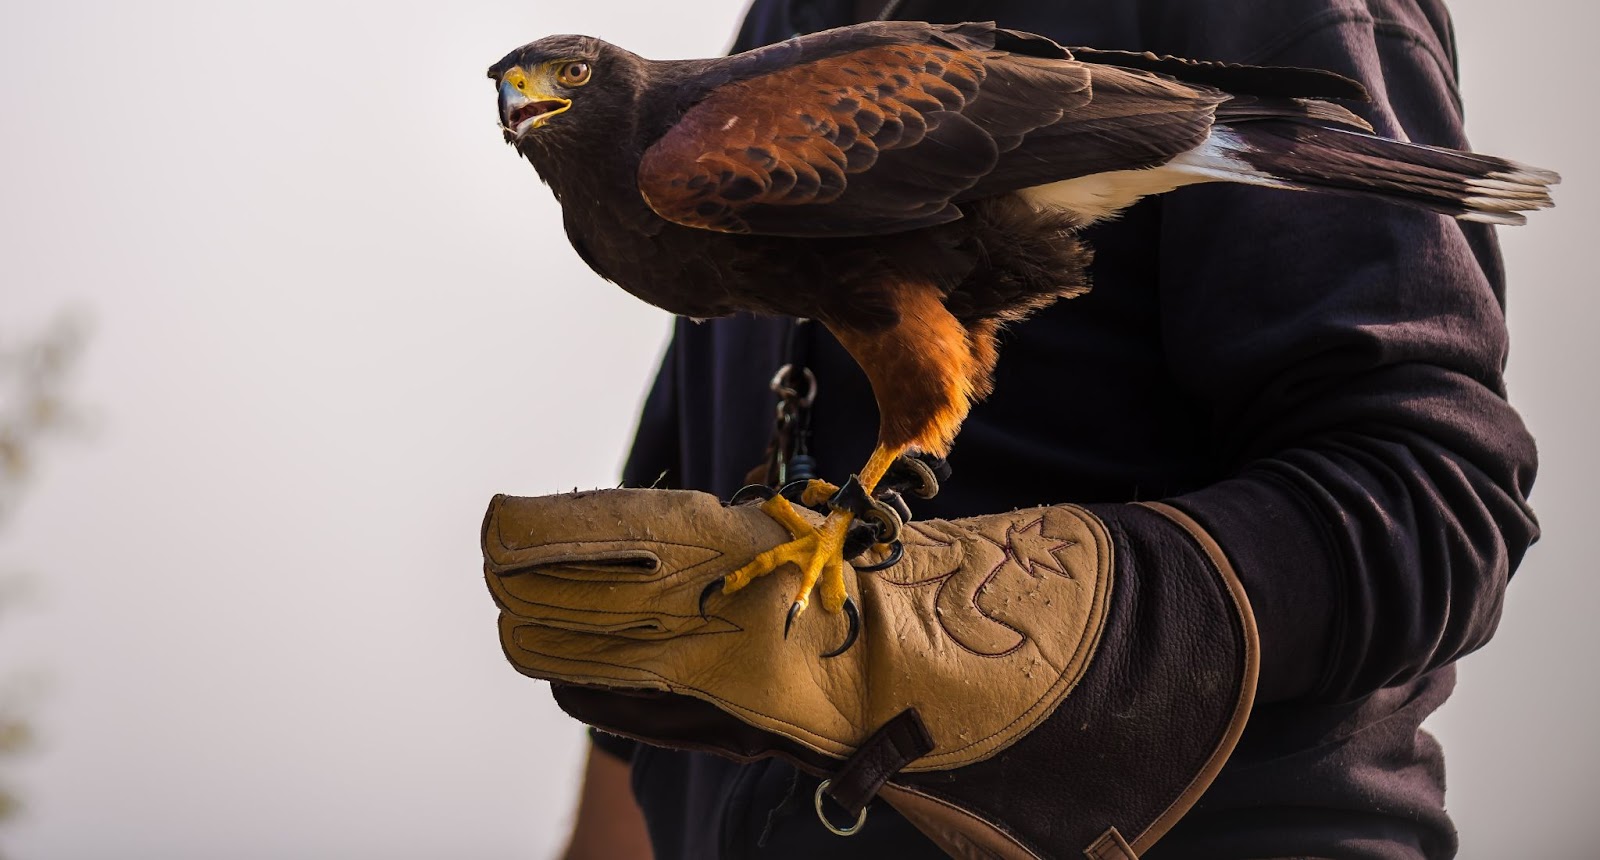 Bird of Prey sitting on a leather glove